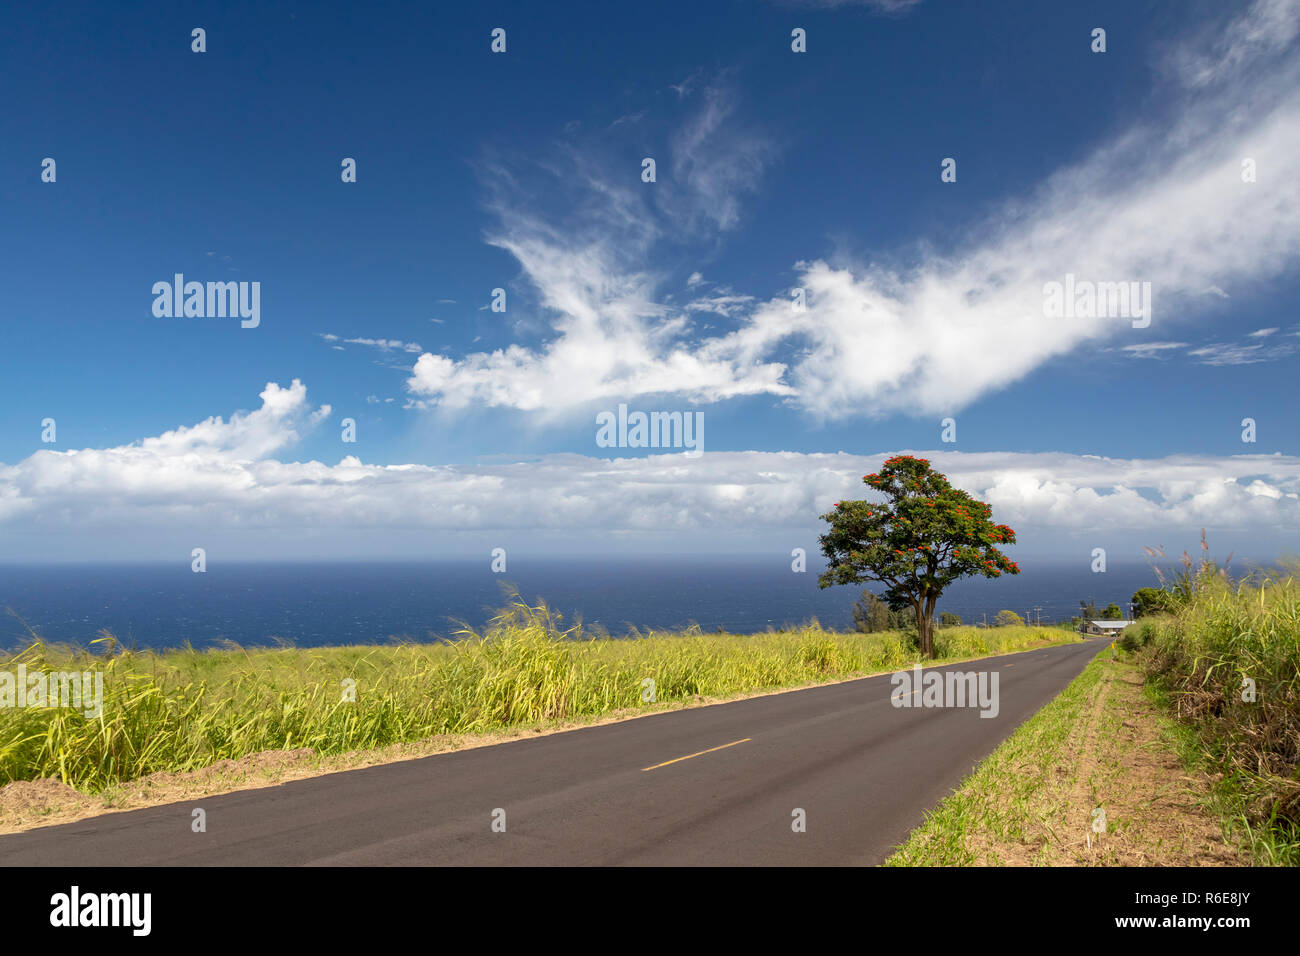 Pa'auilo, Hawaii - A rural road on the Big Island's Hamakua Coast above the Pacific Ocean. Stock Photo